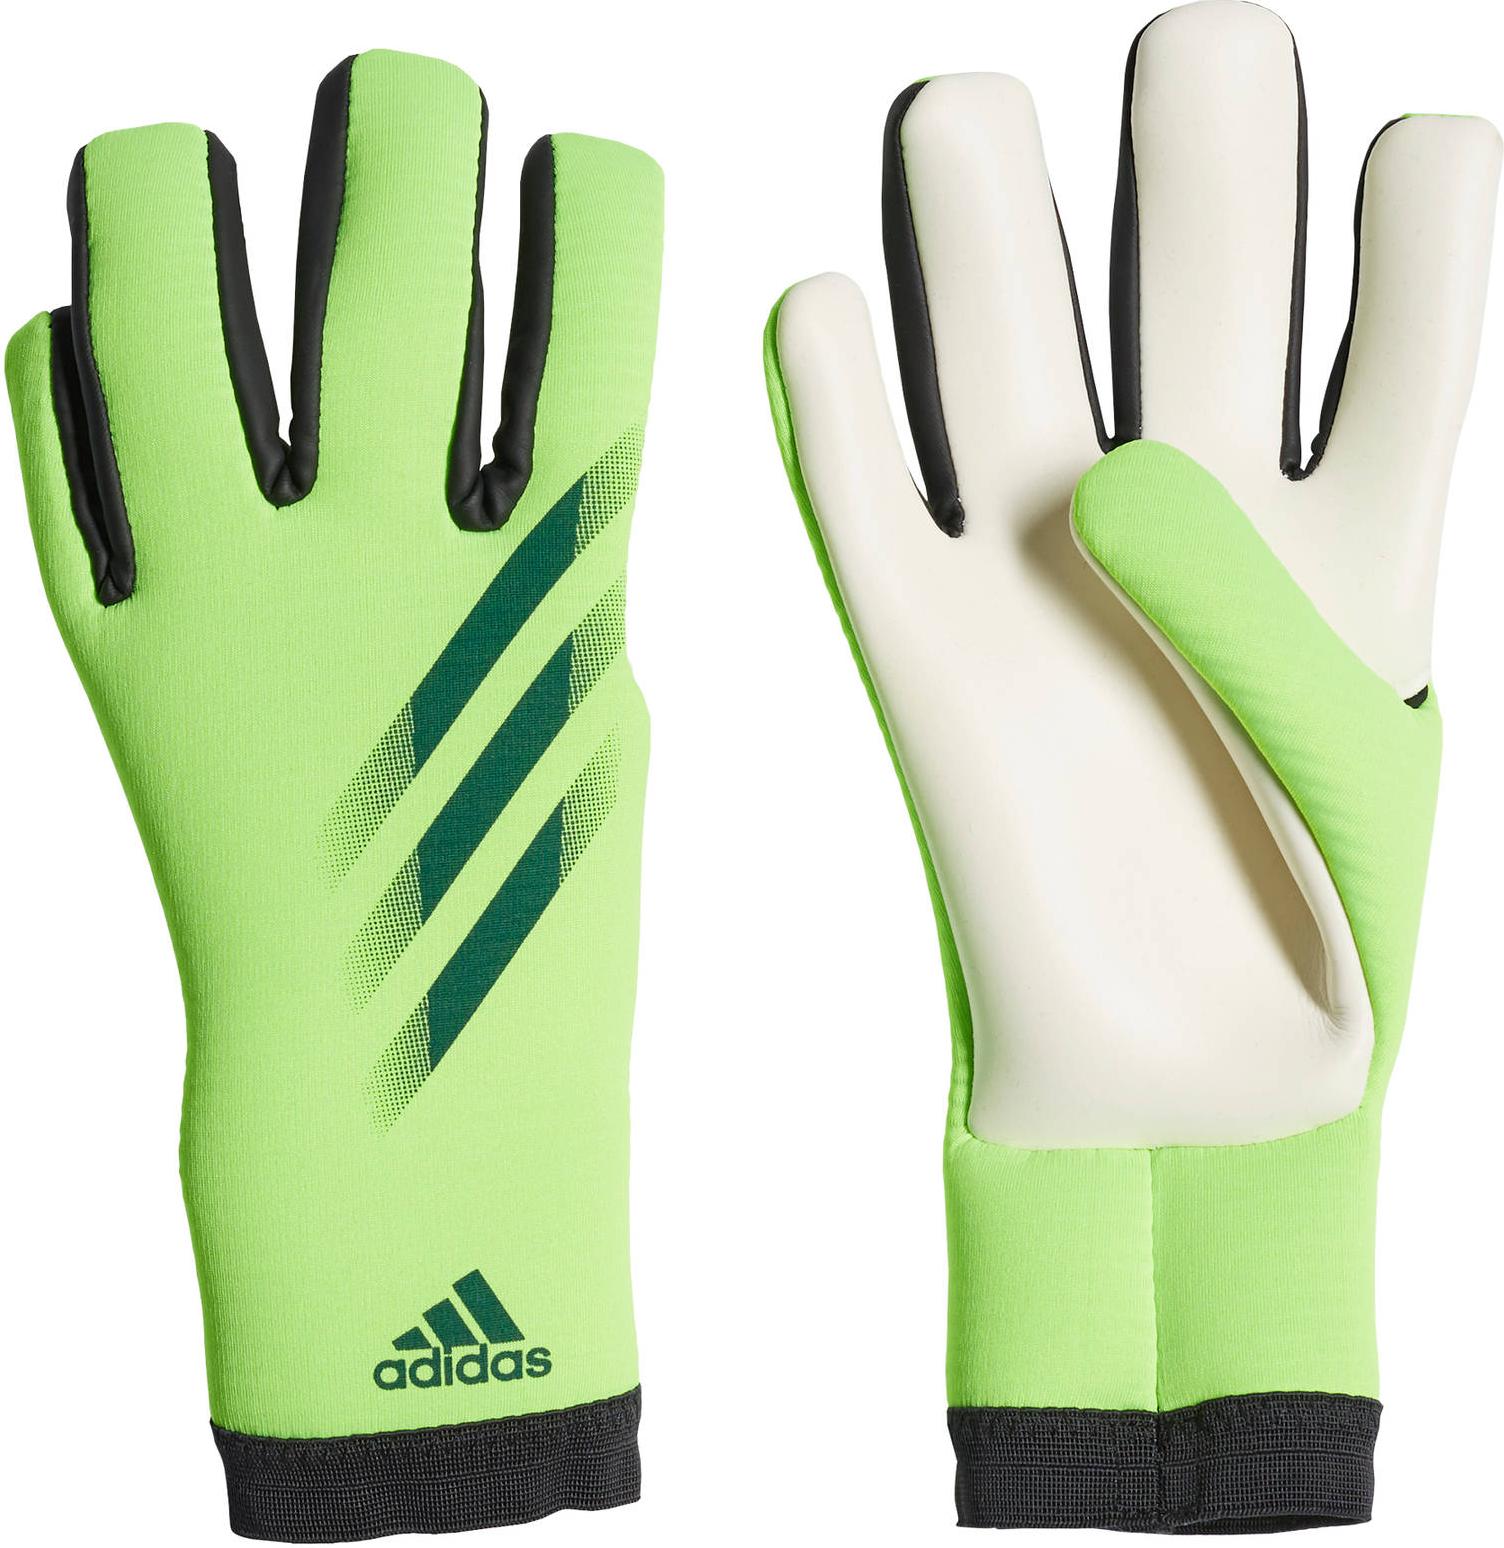 Goalkeeper's gloves adidas X GL TRN